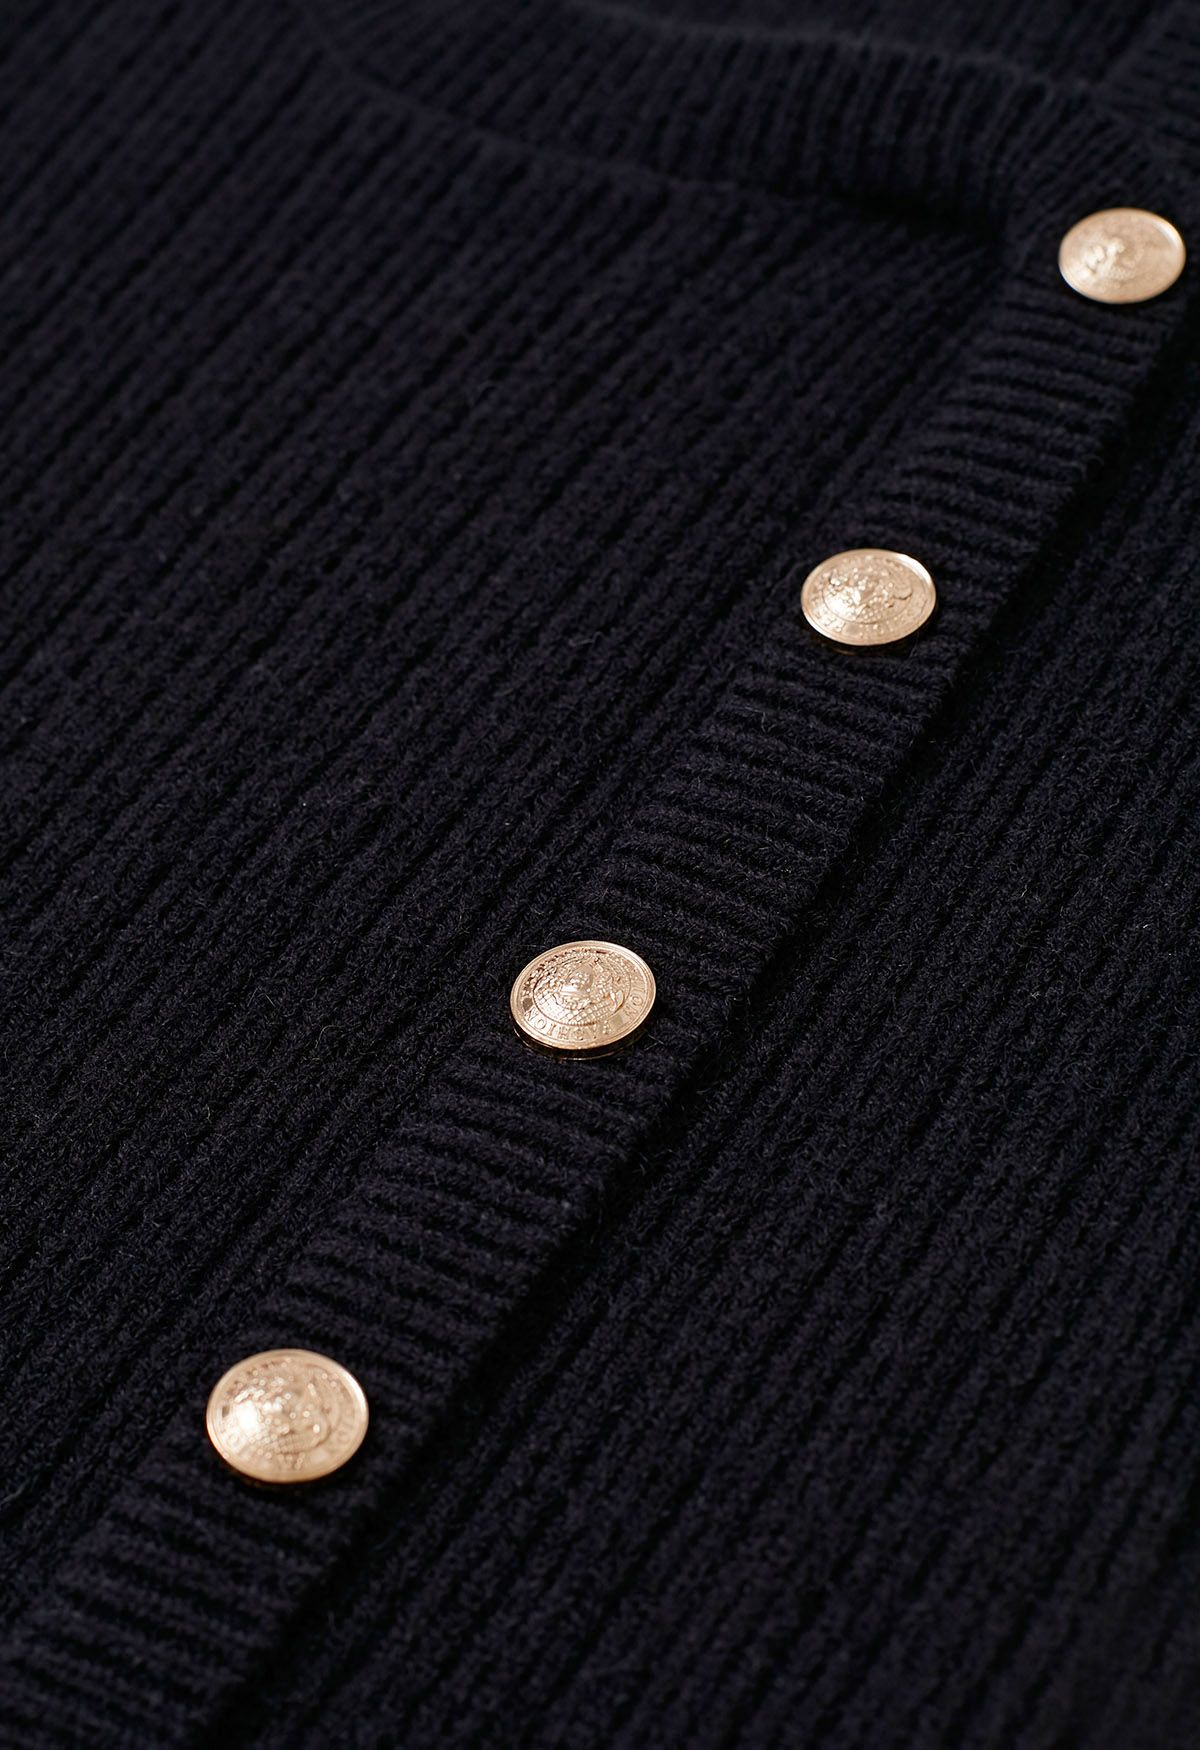 Irregular Golden Button Trim Cropped Knit Top in Black